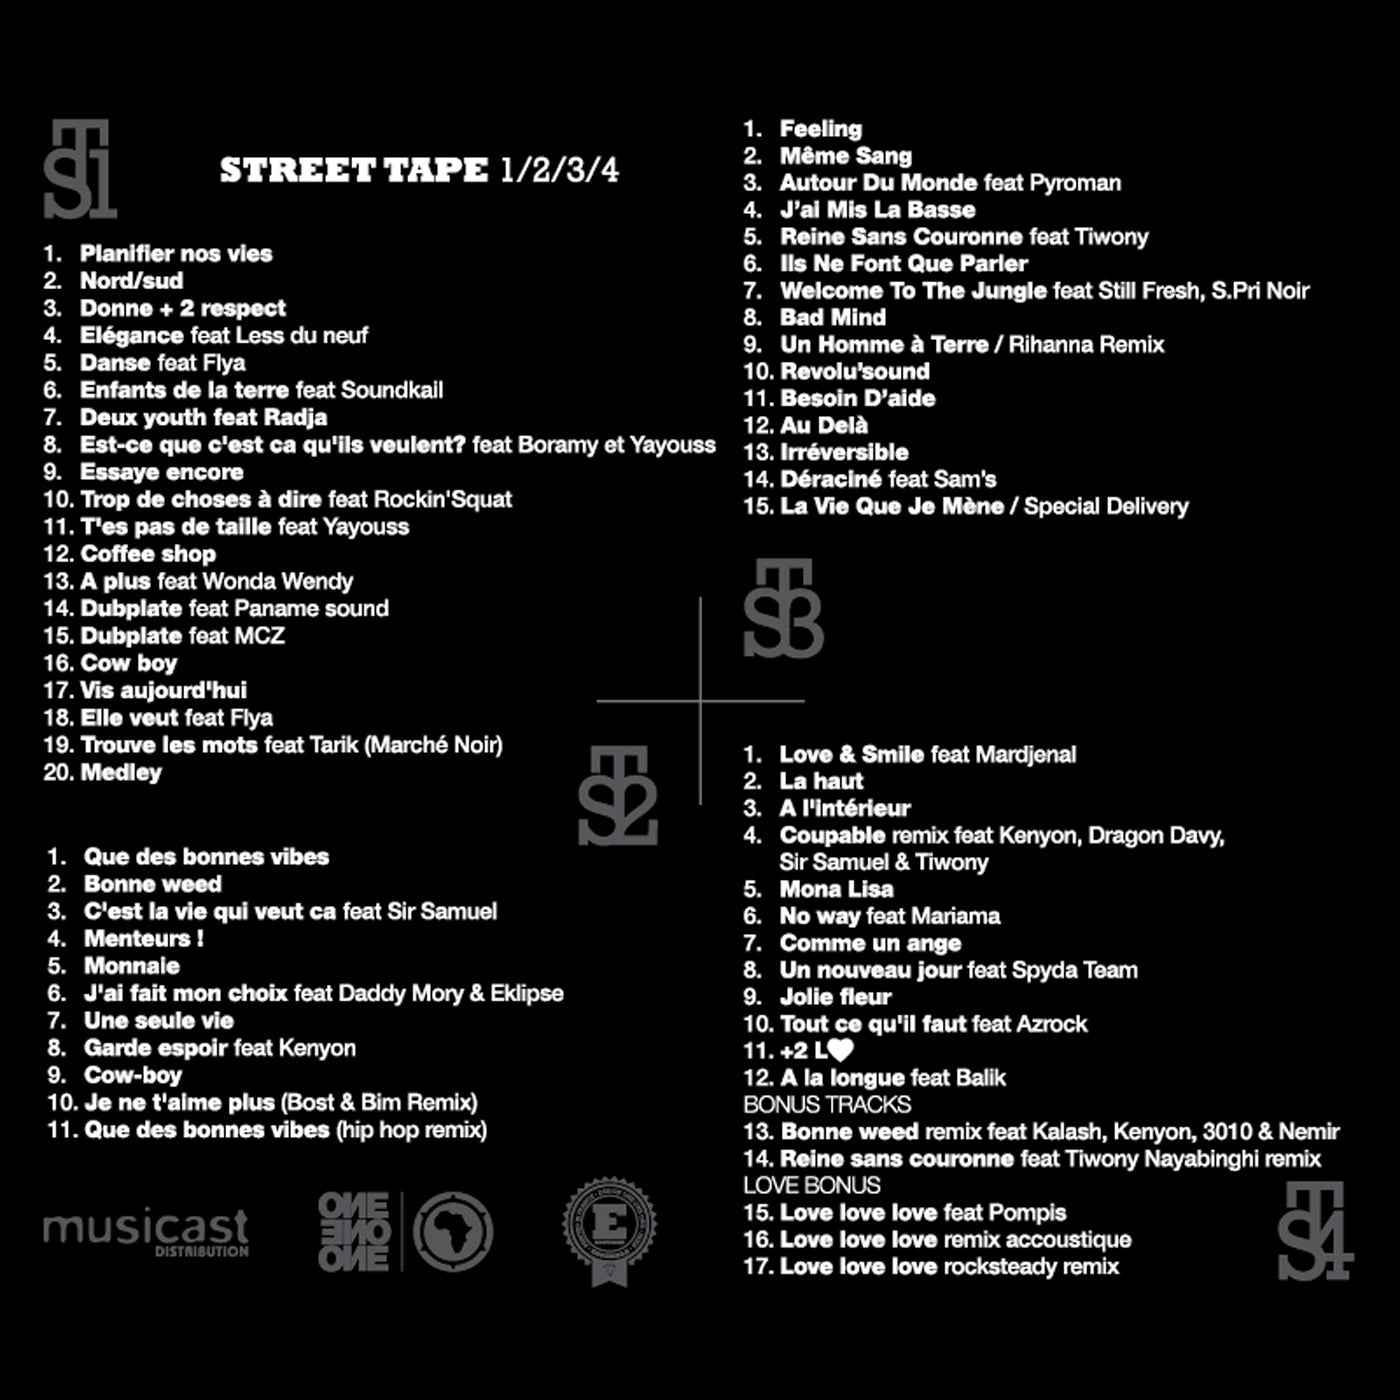 CD - Coffret Street Tape